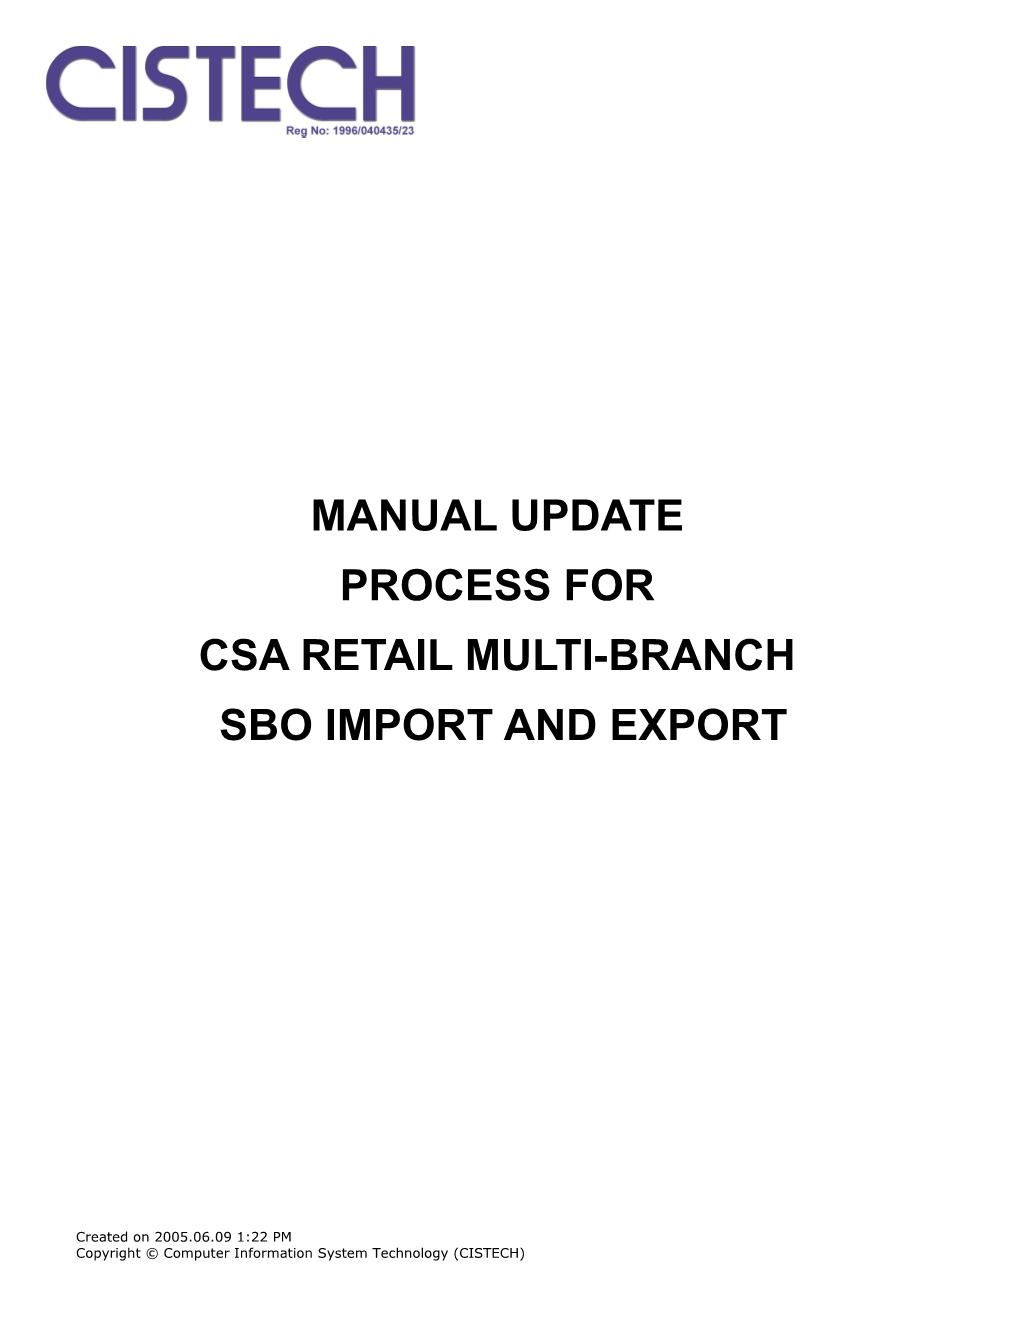 CSA Retail Multi-Branch